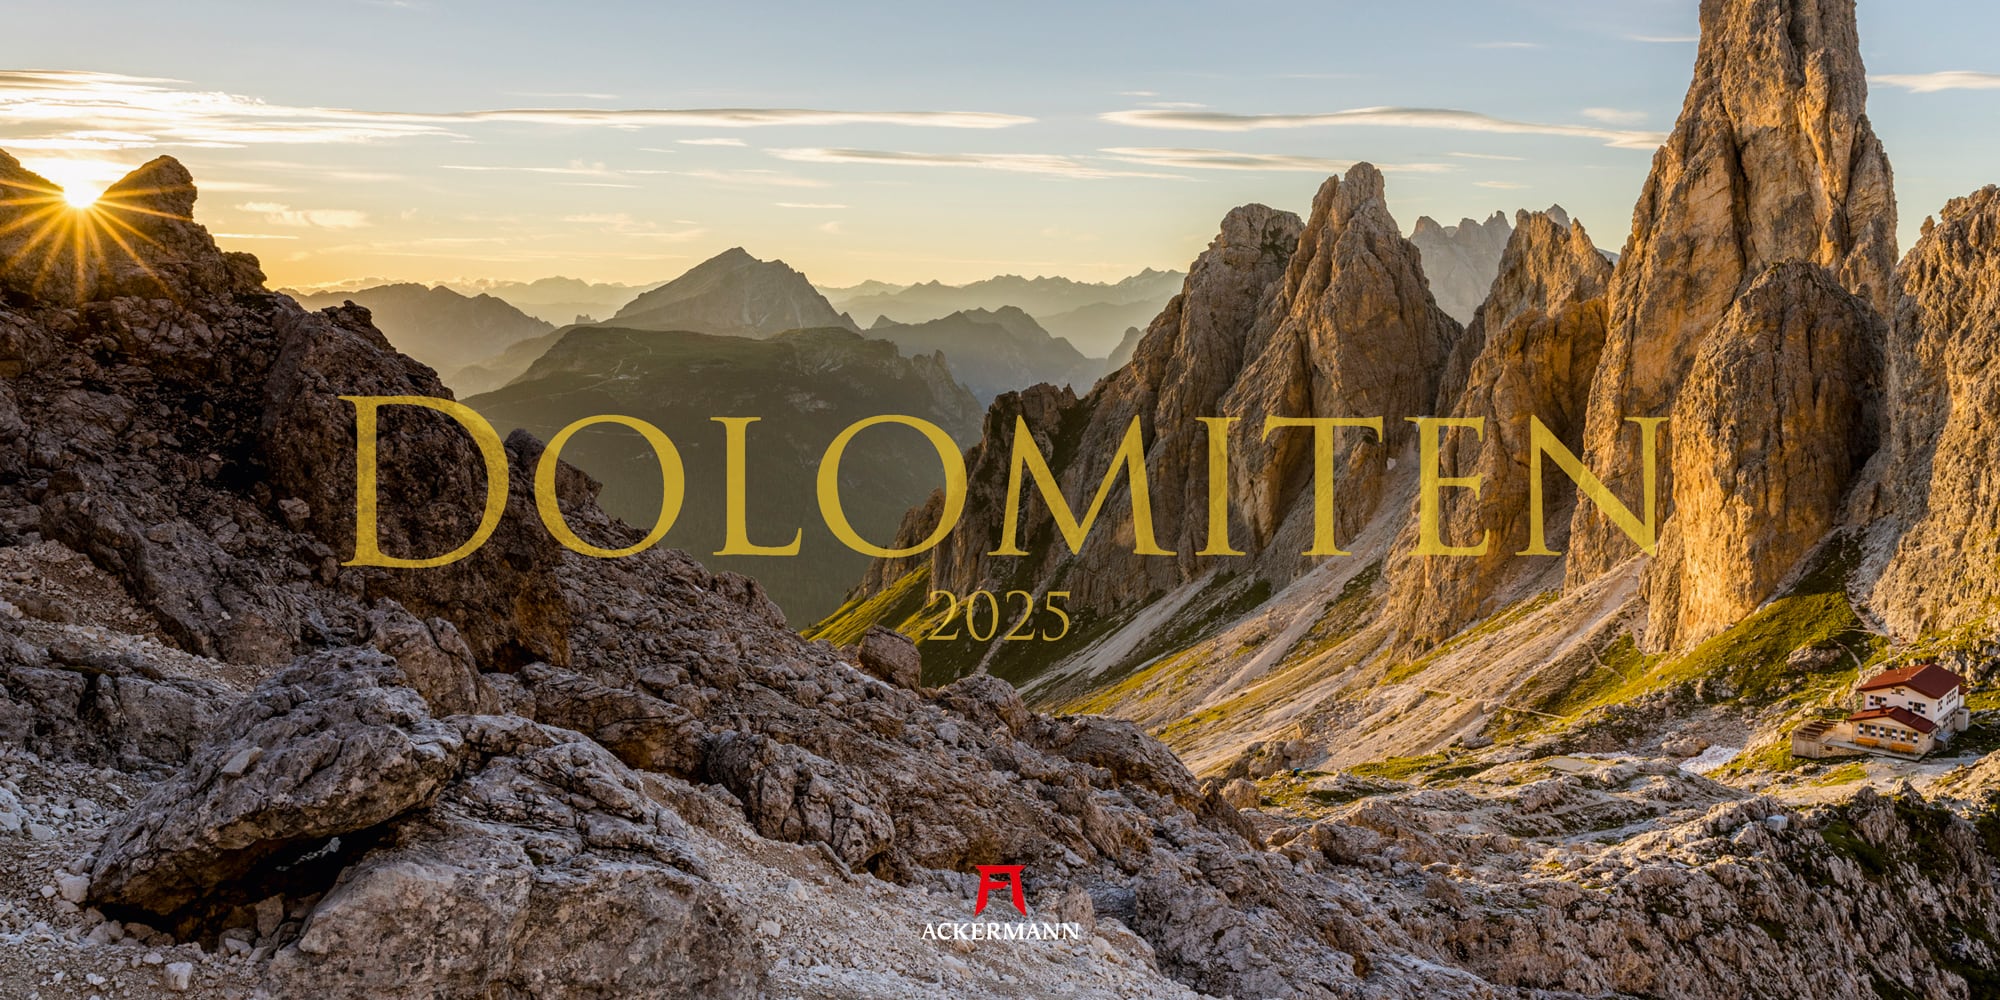 Ackermann Calendar Dolomites 2025 - Cover Page